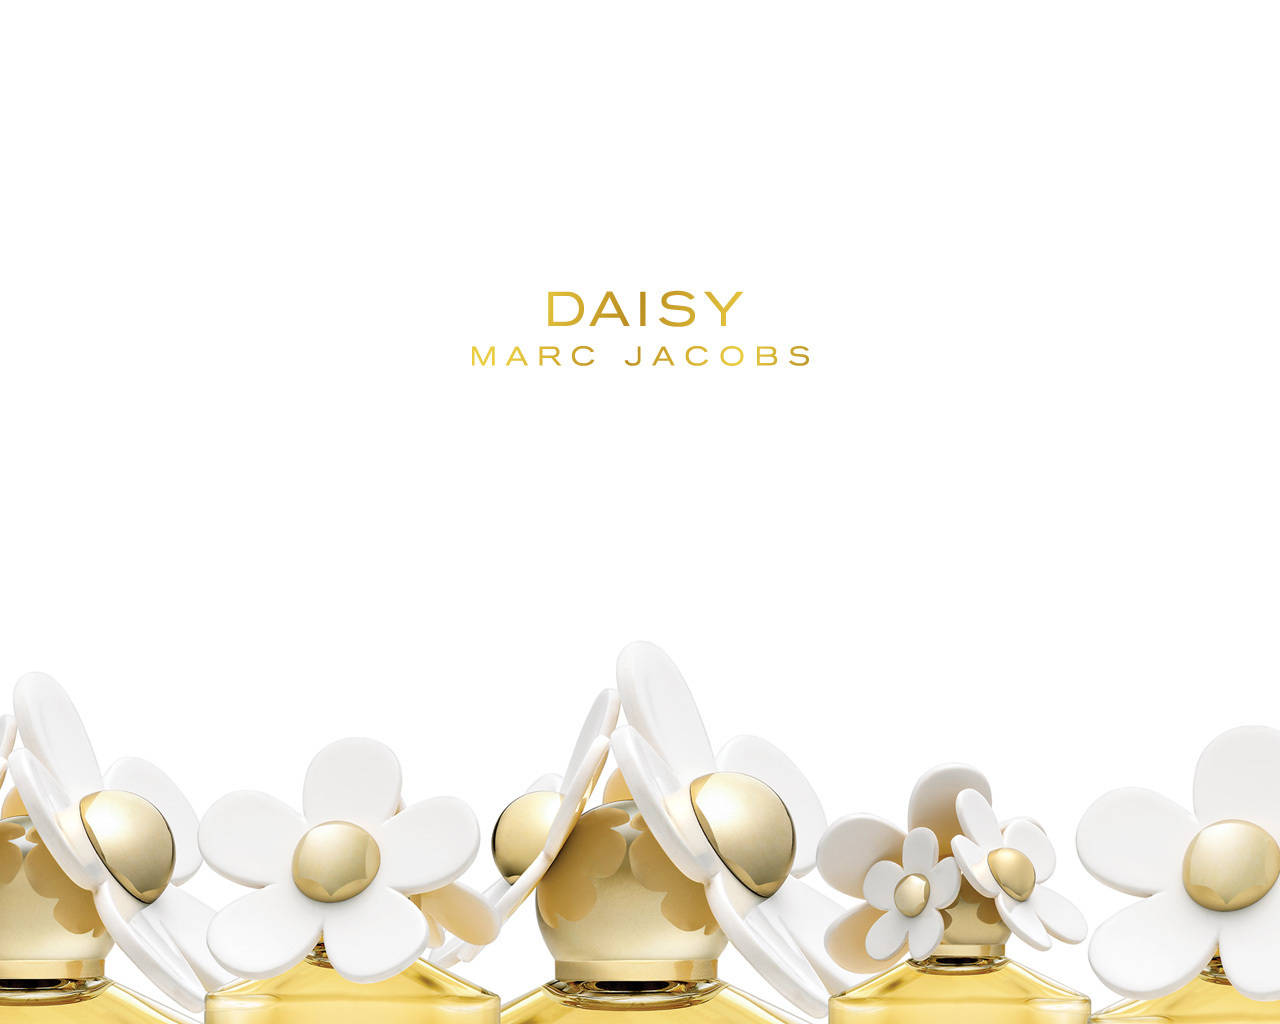 Marc Jacobs White & Gold Daisy Variant Wallpaper